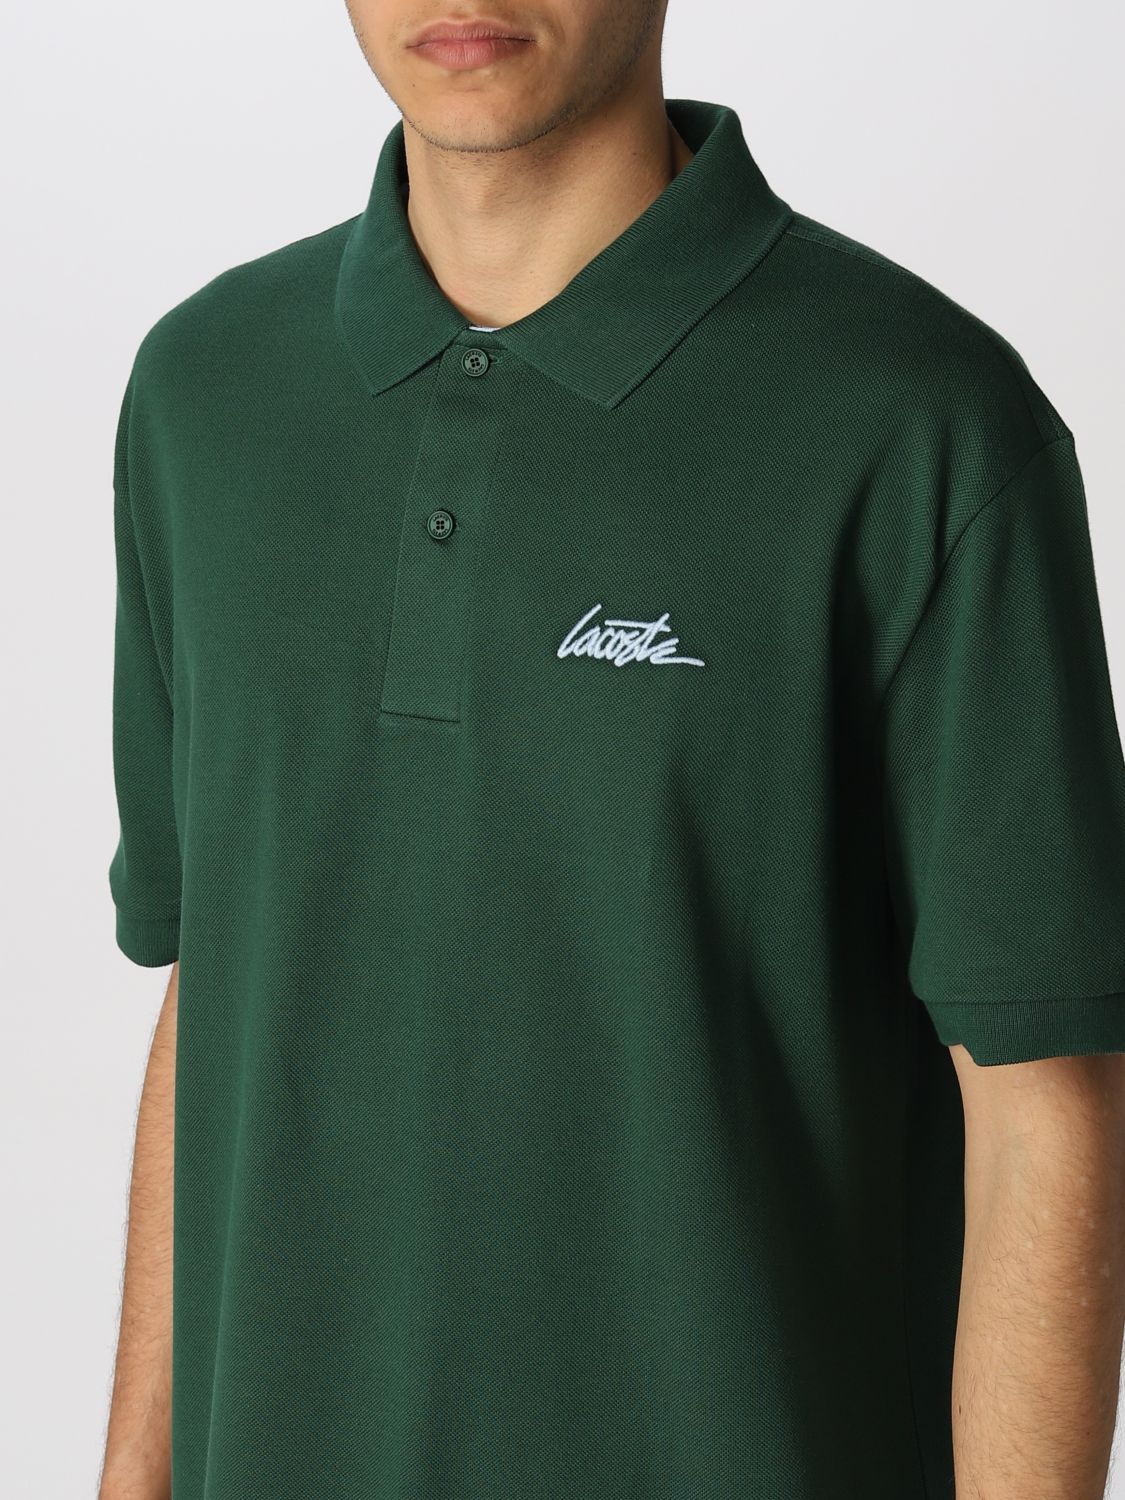 Polo shirt Lacoste L!Ve: Lacoste L!Ve polo shirt for men green 3